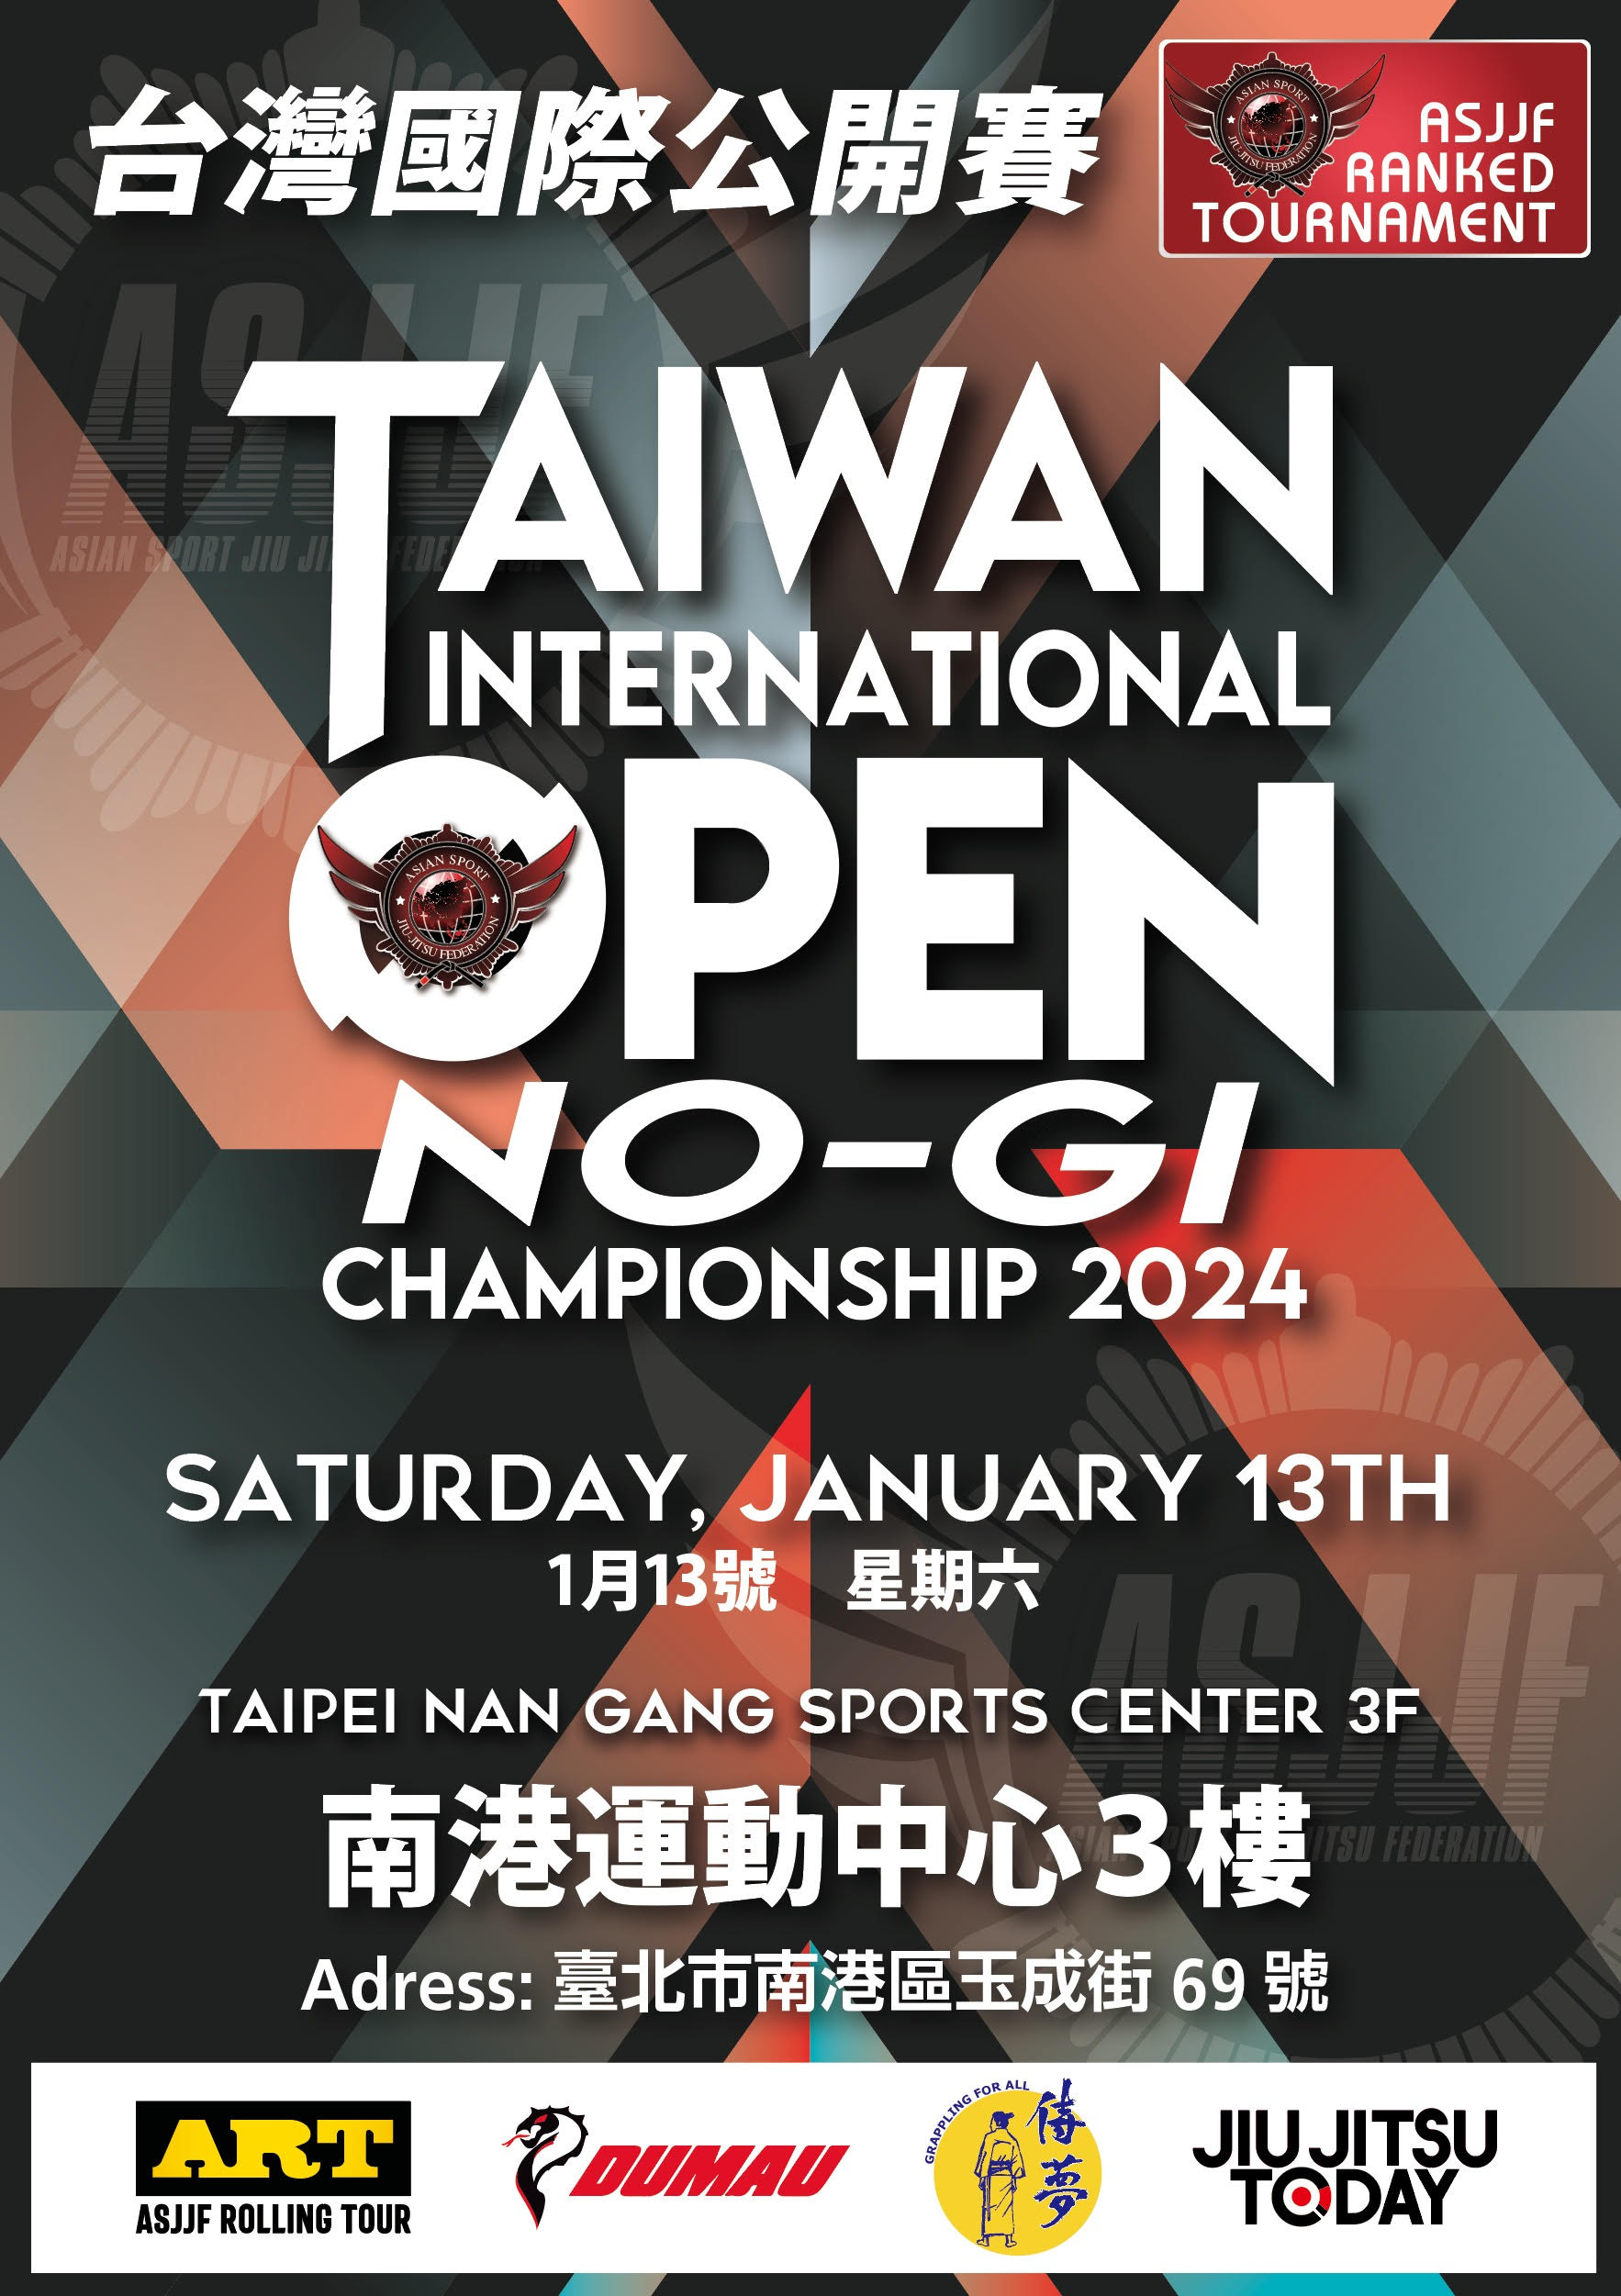 asjjf taiwan international open no-gi championship 2024